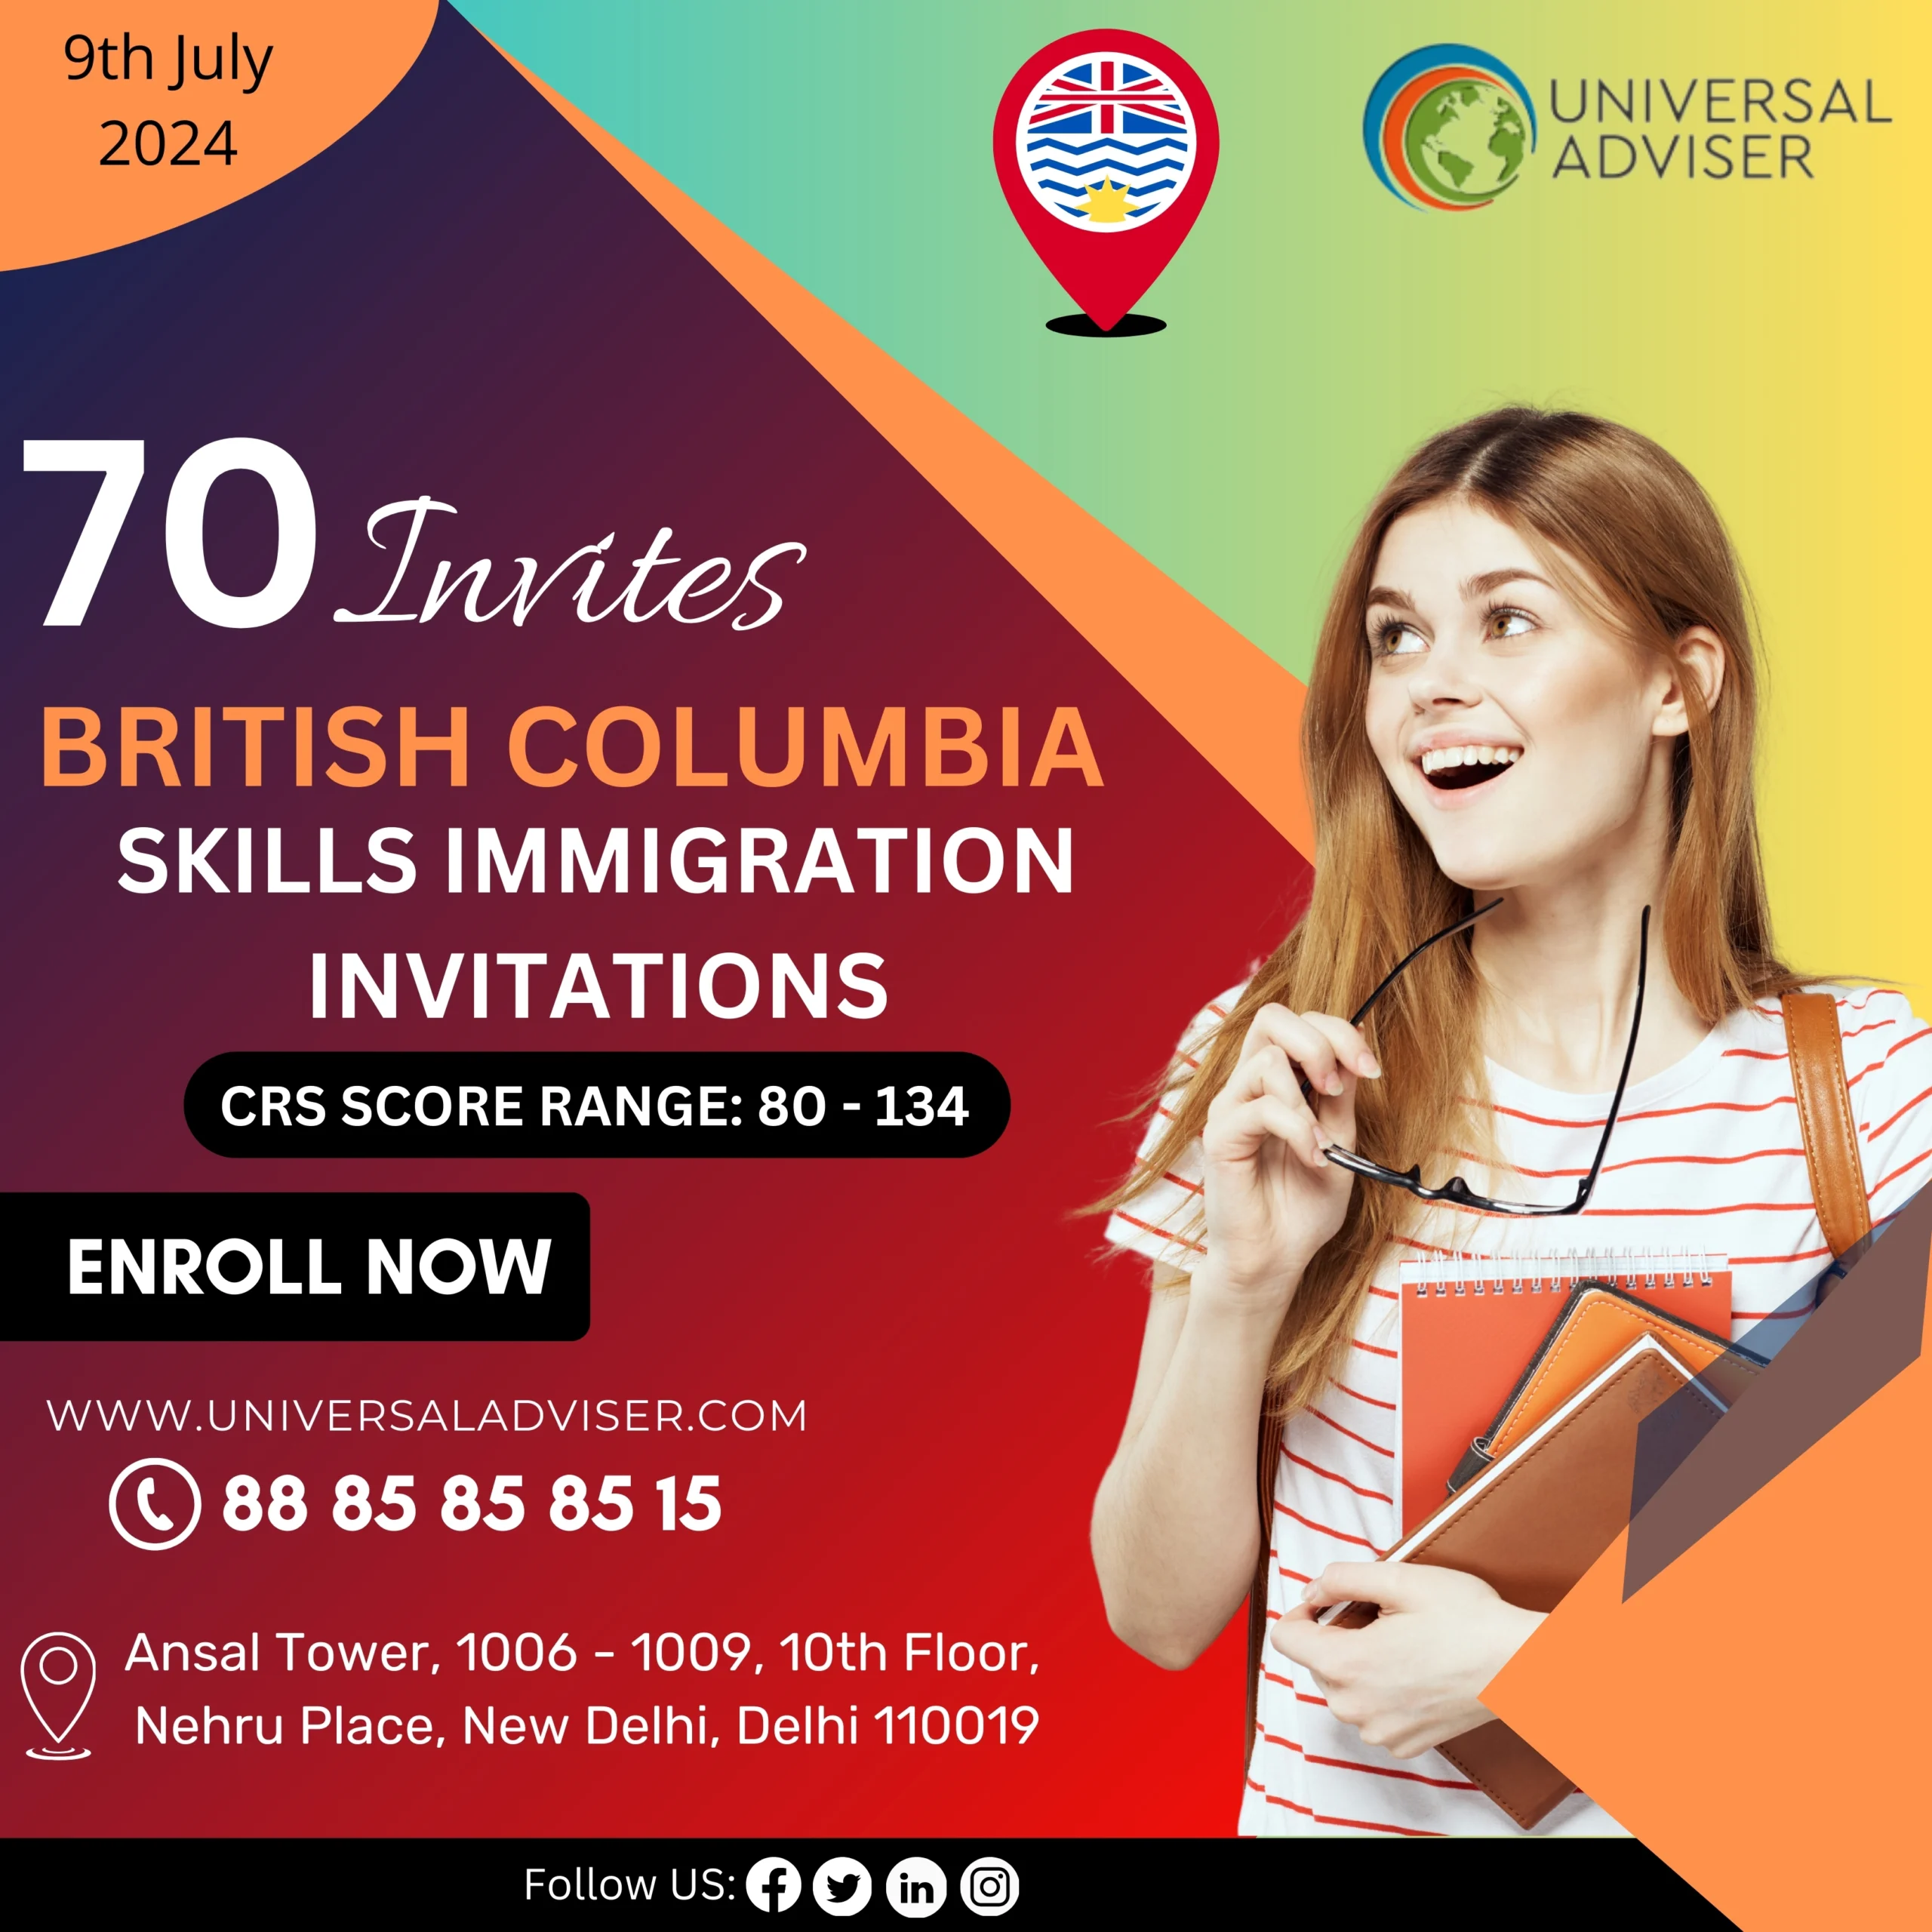 Provincial Nominee Program Draw in British Columbia Issues 70 Invitations